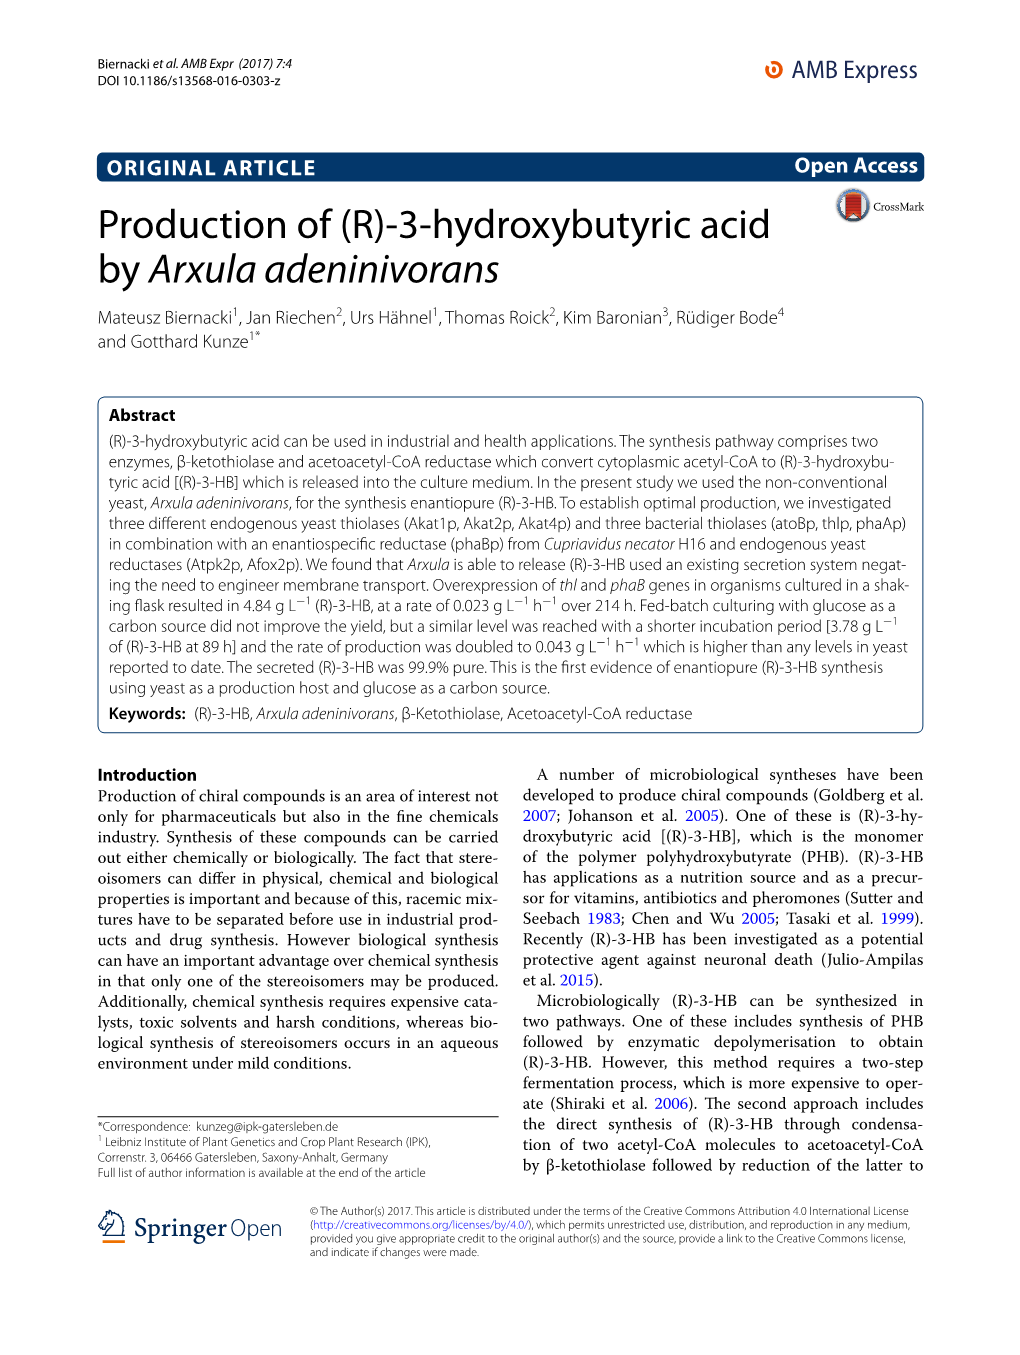 Production of (R)-3-Hydroxybutyric Acid by Arxula Adeninivorans